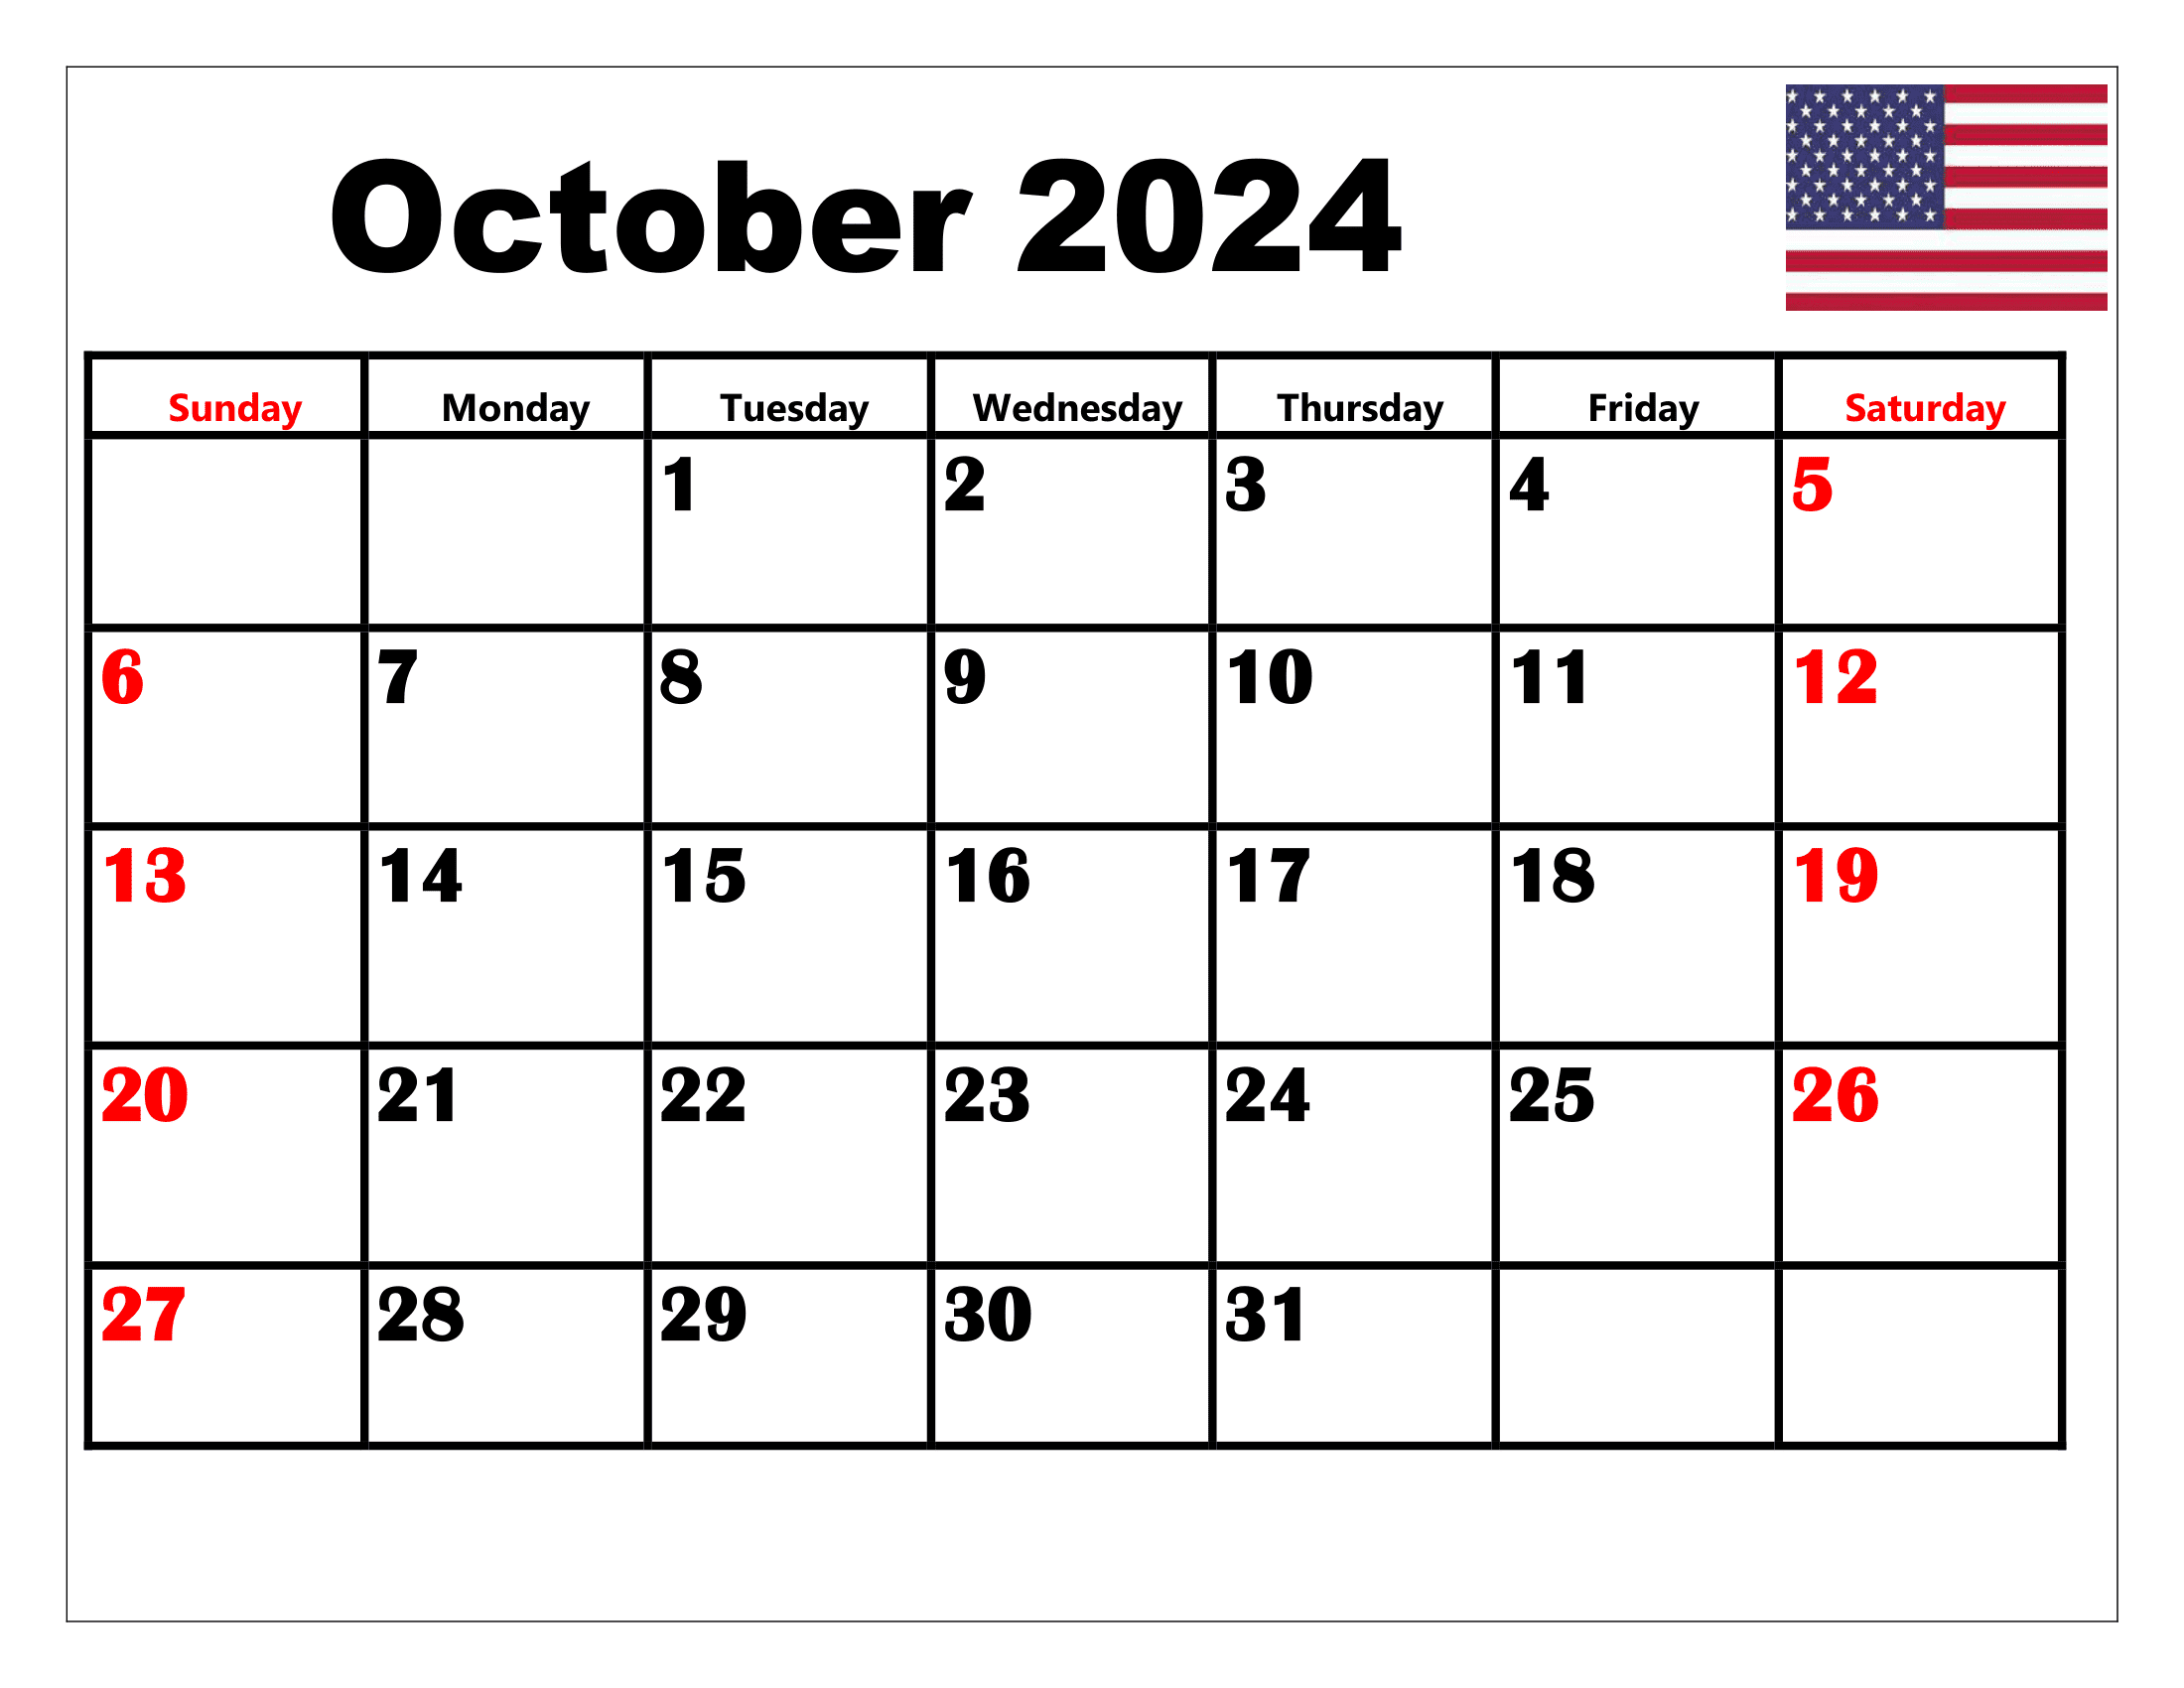 October 2024 Calendar Printable Pdf Free Templates With Holidays for October 2024 Calendar With Holidays Printable